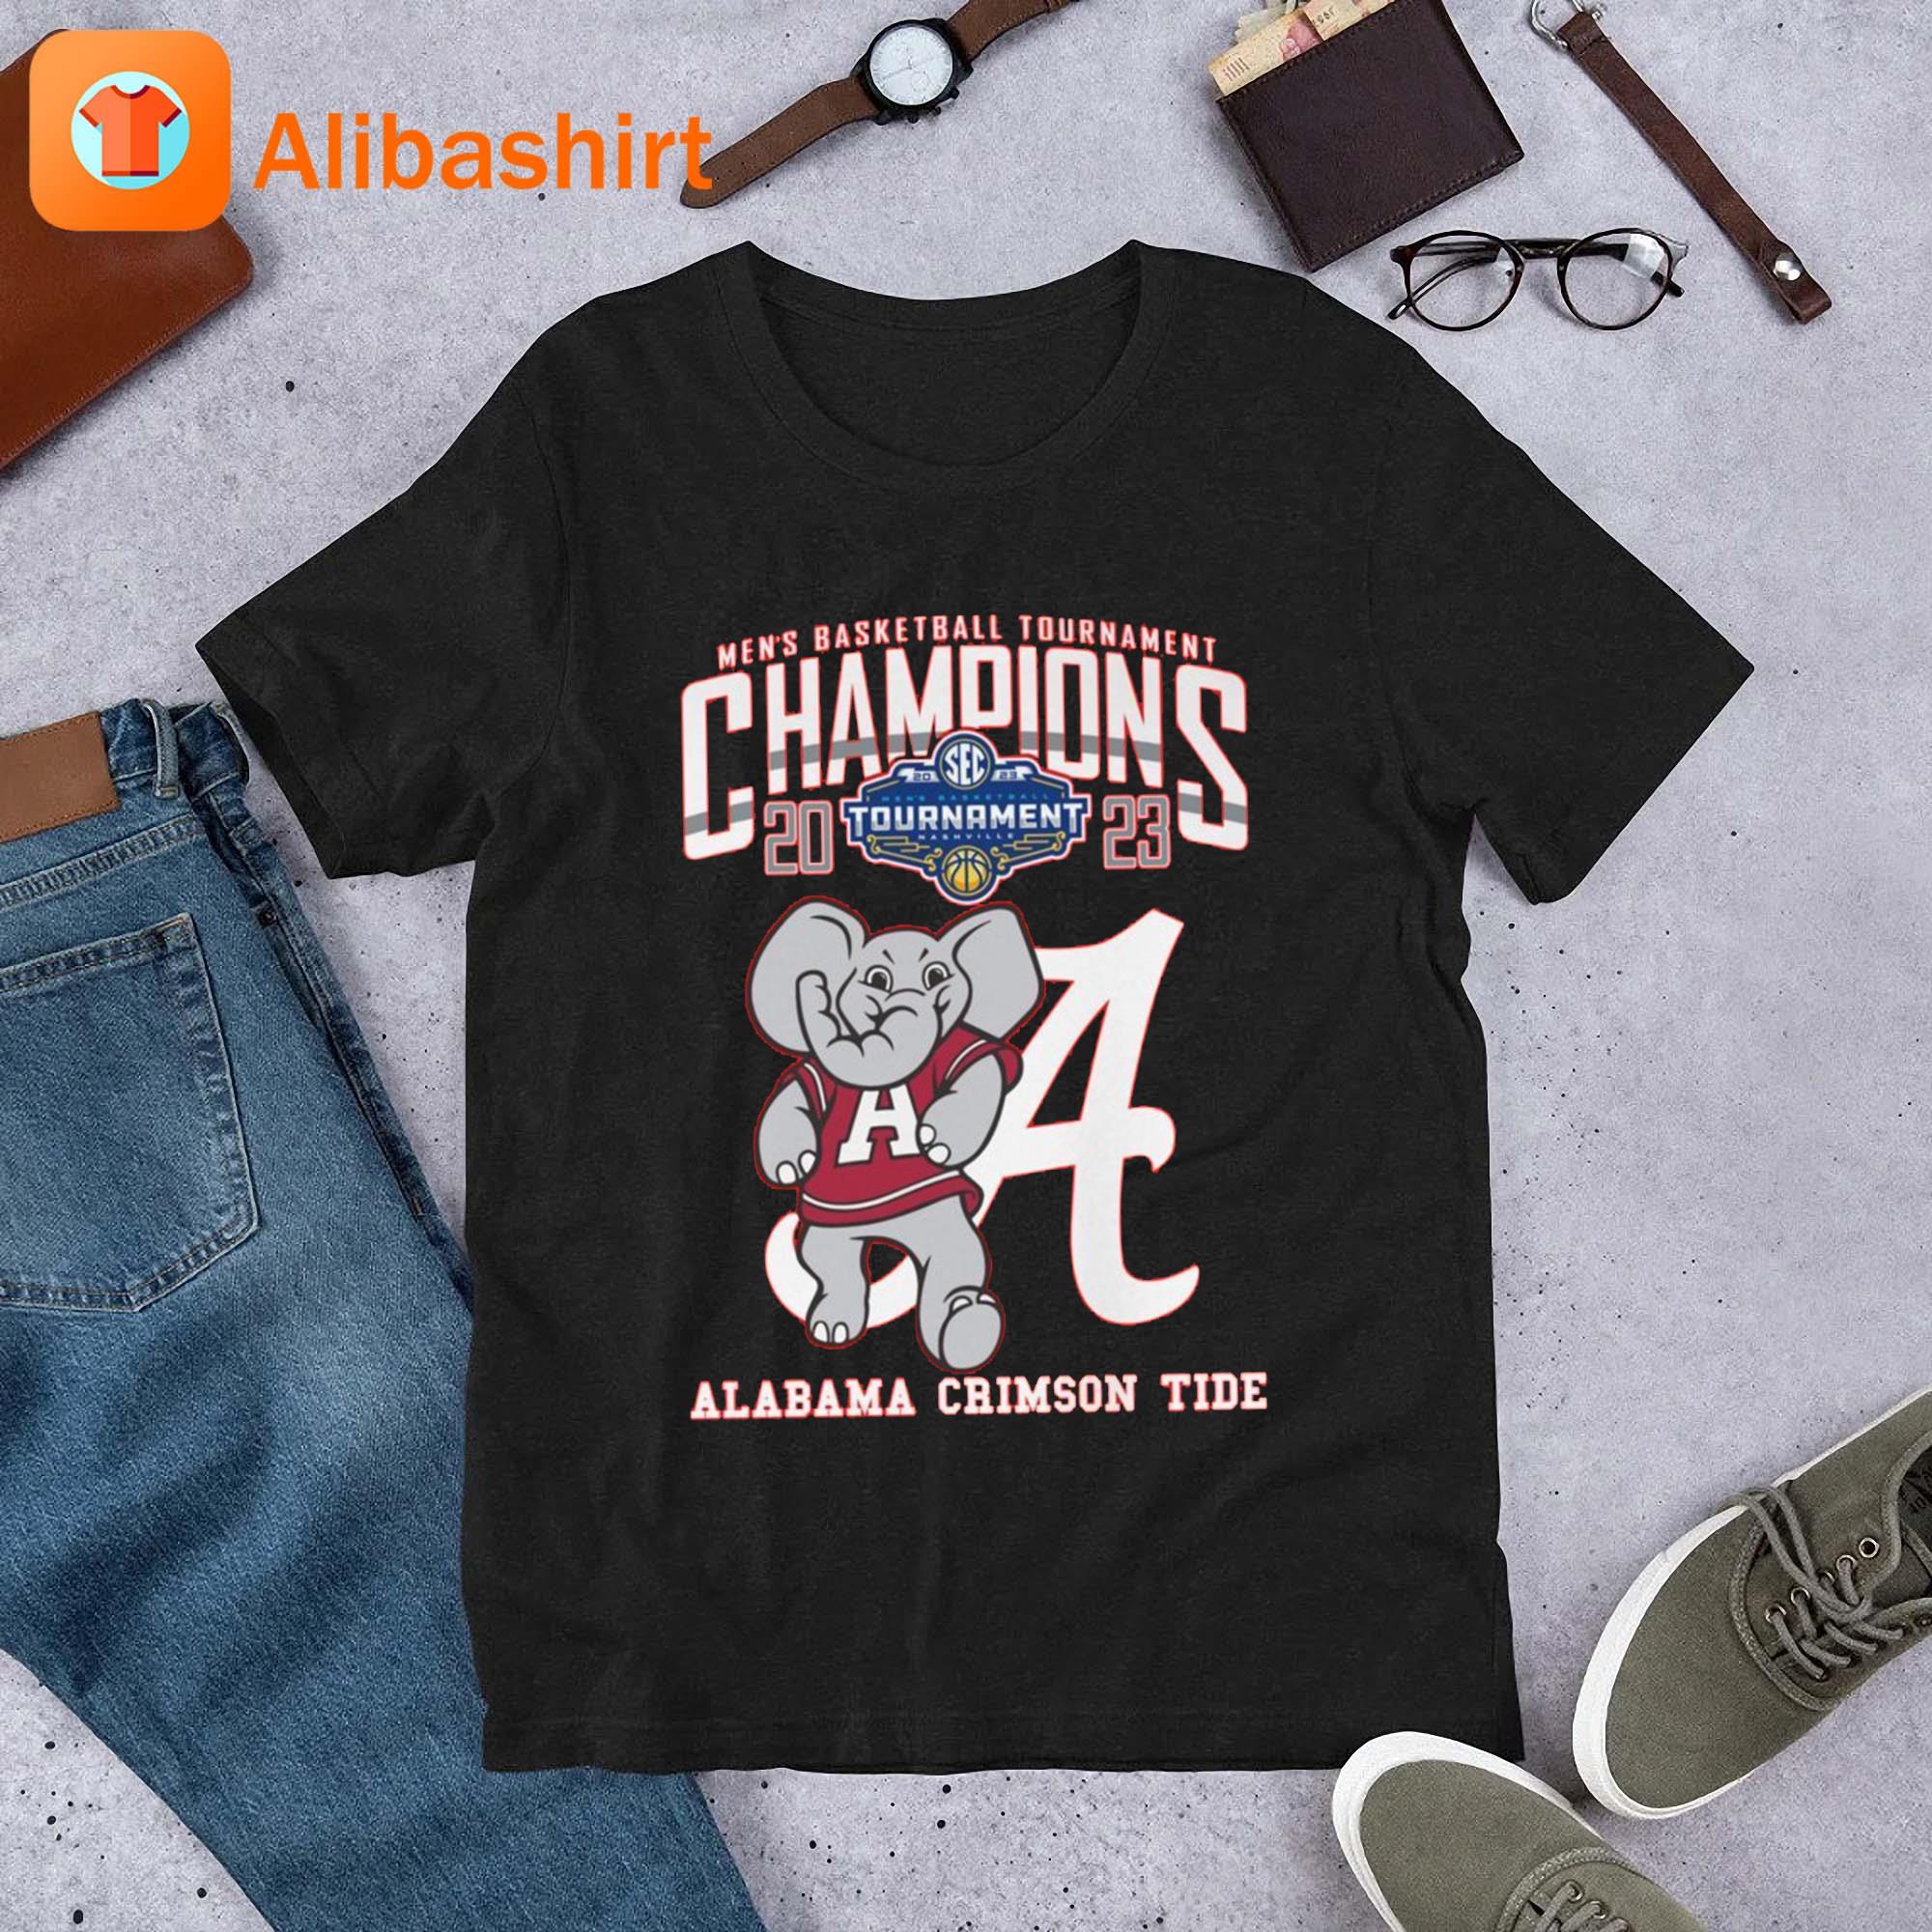 Men's Basketball Tournament Champions 2023 Alabama Crimson Tide Shirt